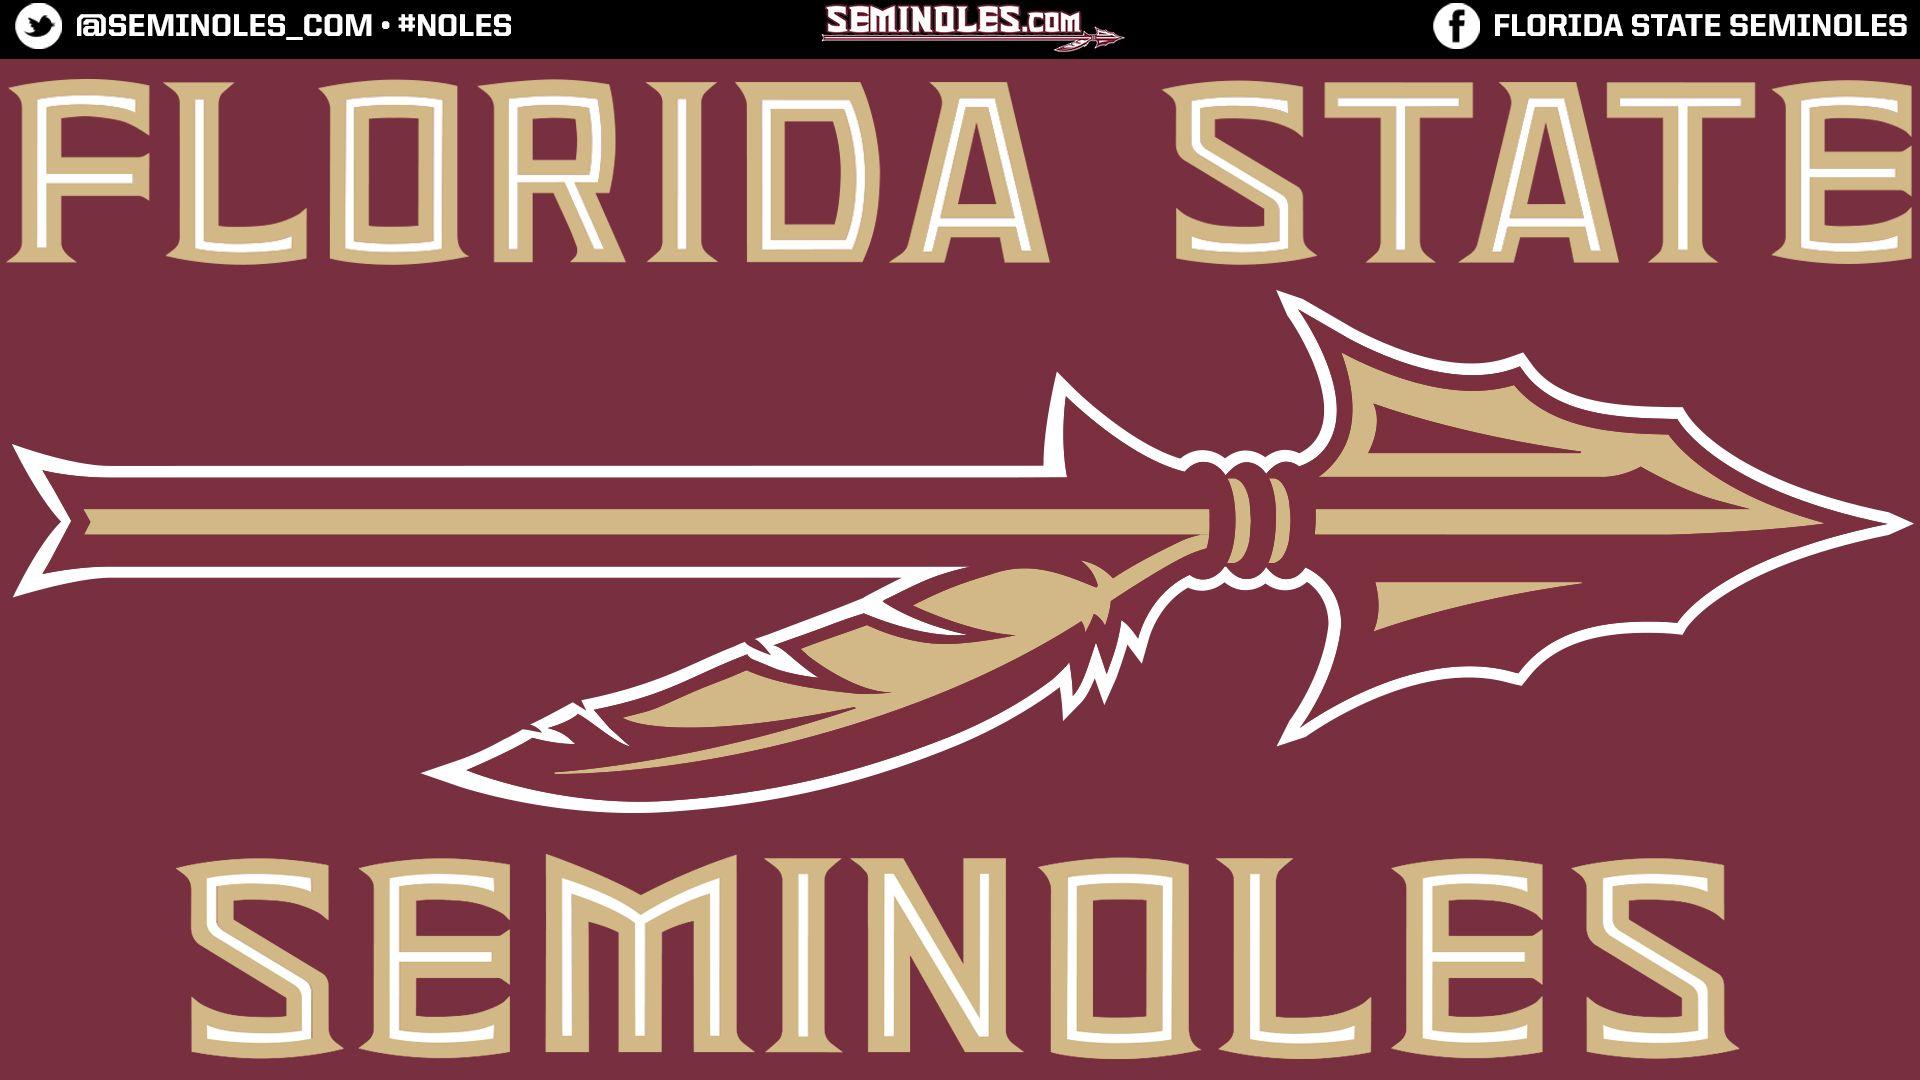 Florida State Seminoles Spear Logo - Seminoles.com Desktop Wallpapers